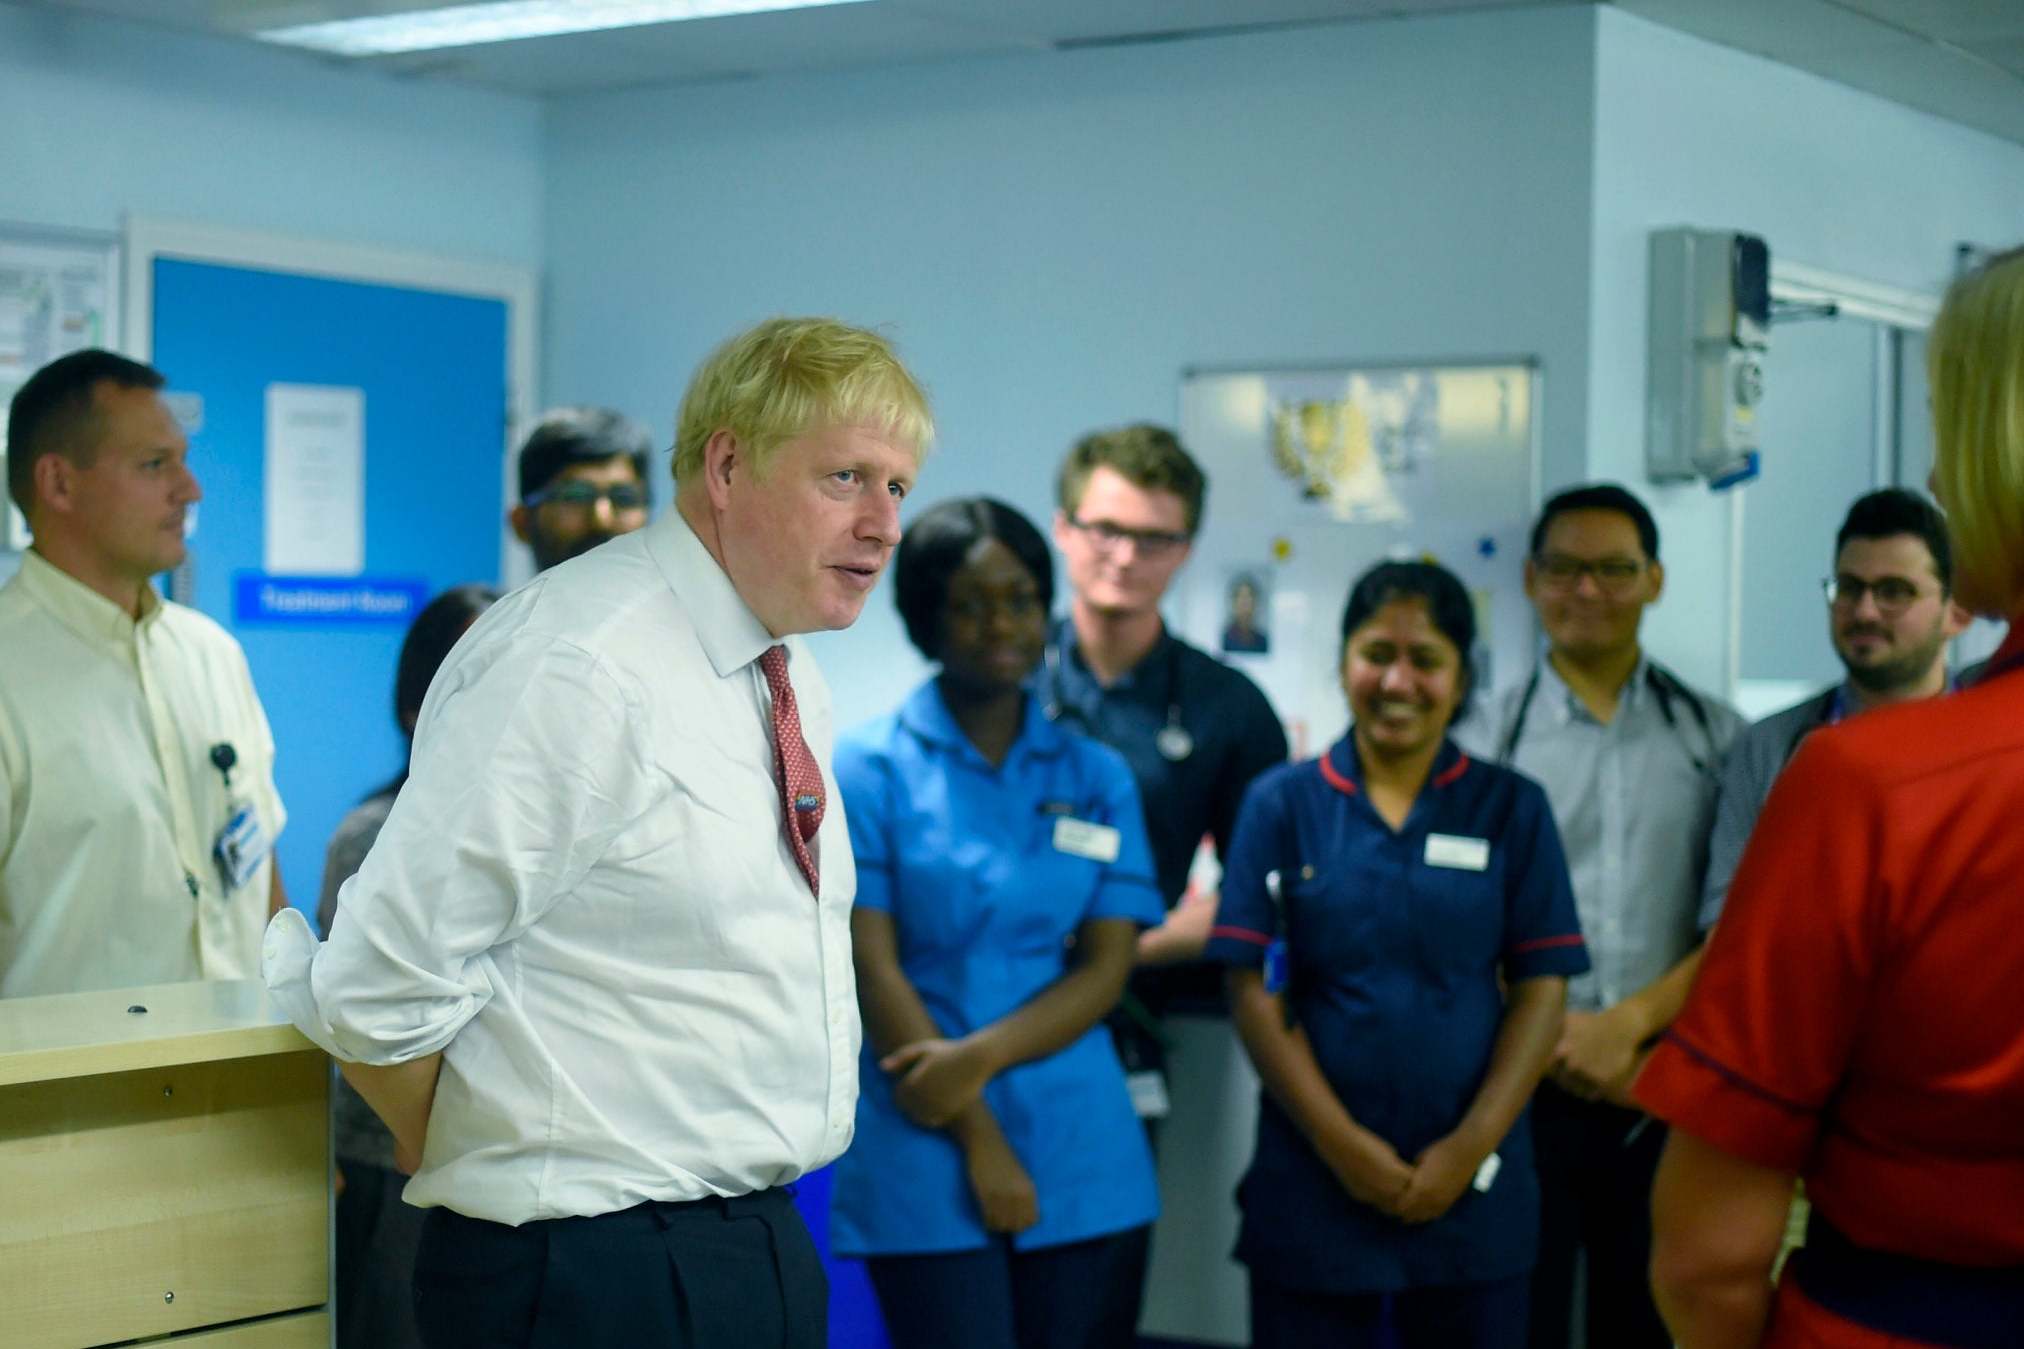 Boris Johnson speaks to medical staff during his visit to Watford General Hospital.